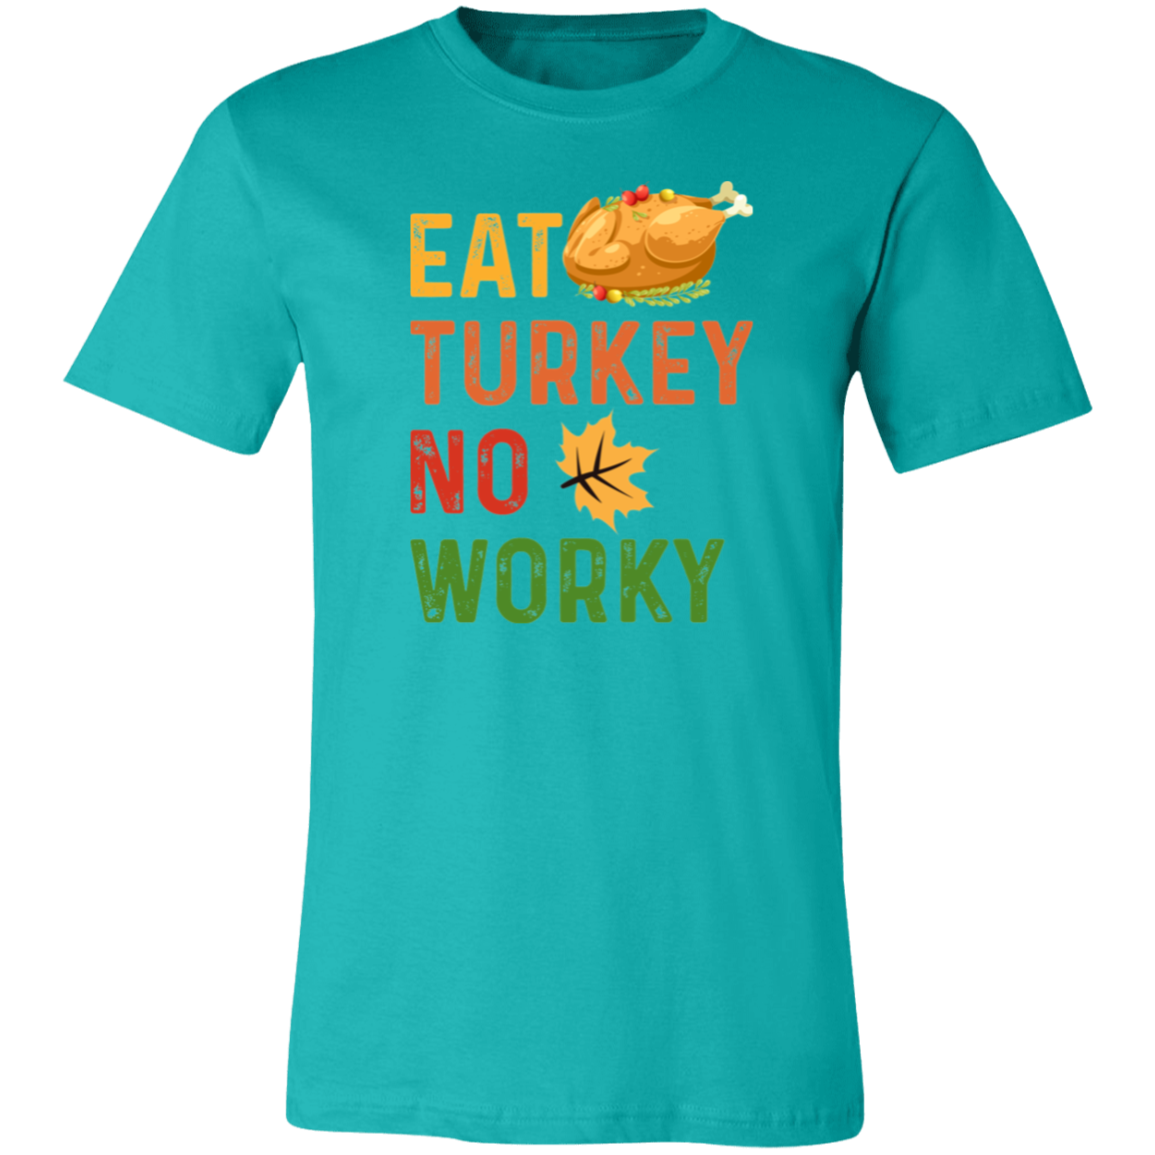 Eat Turkey No Worky Shirt